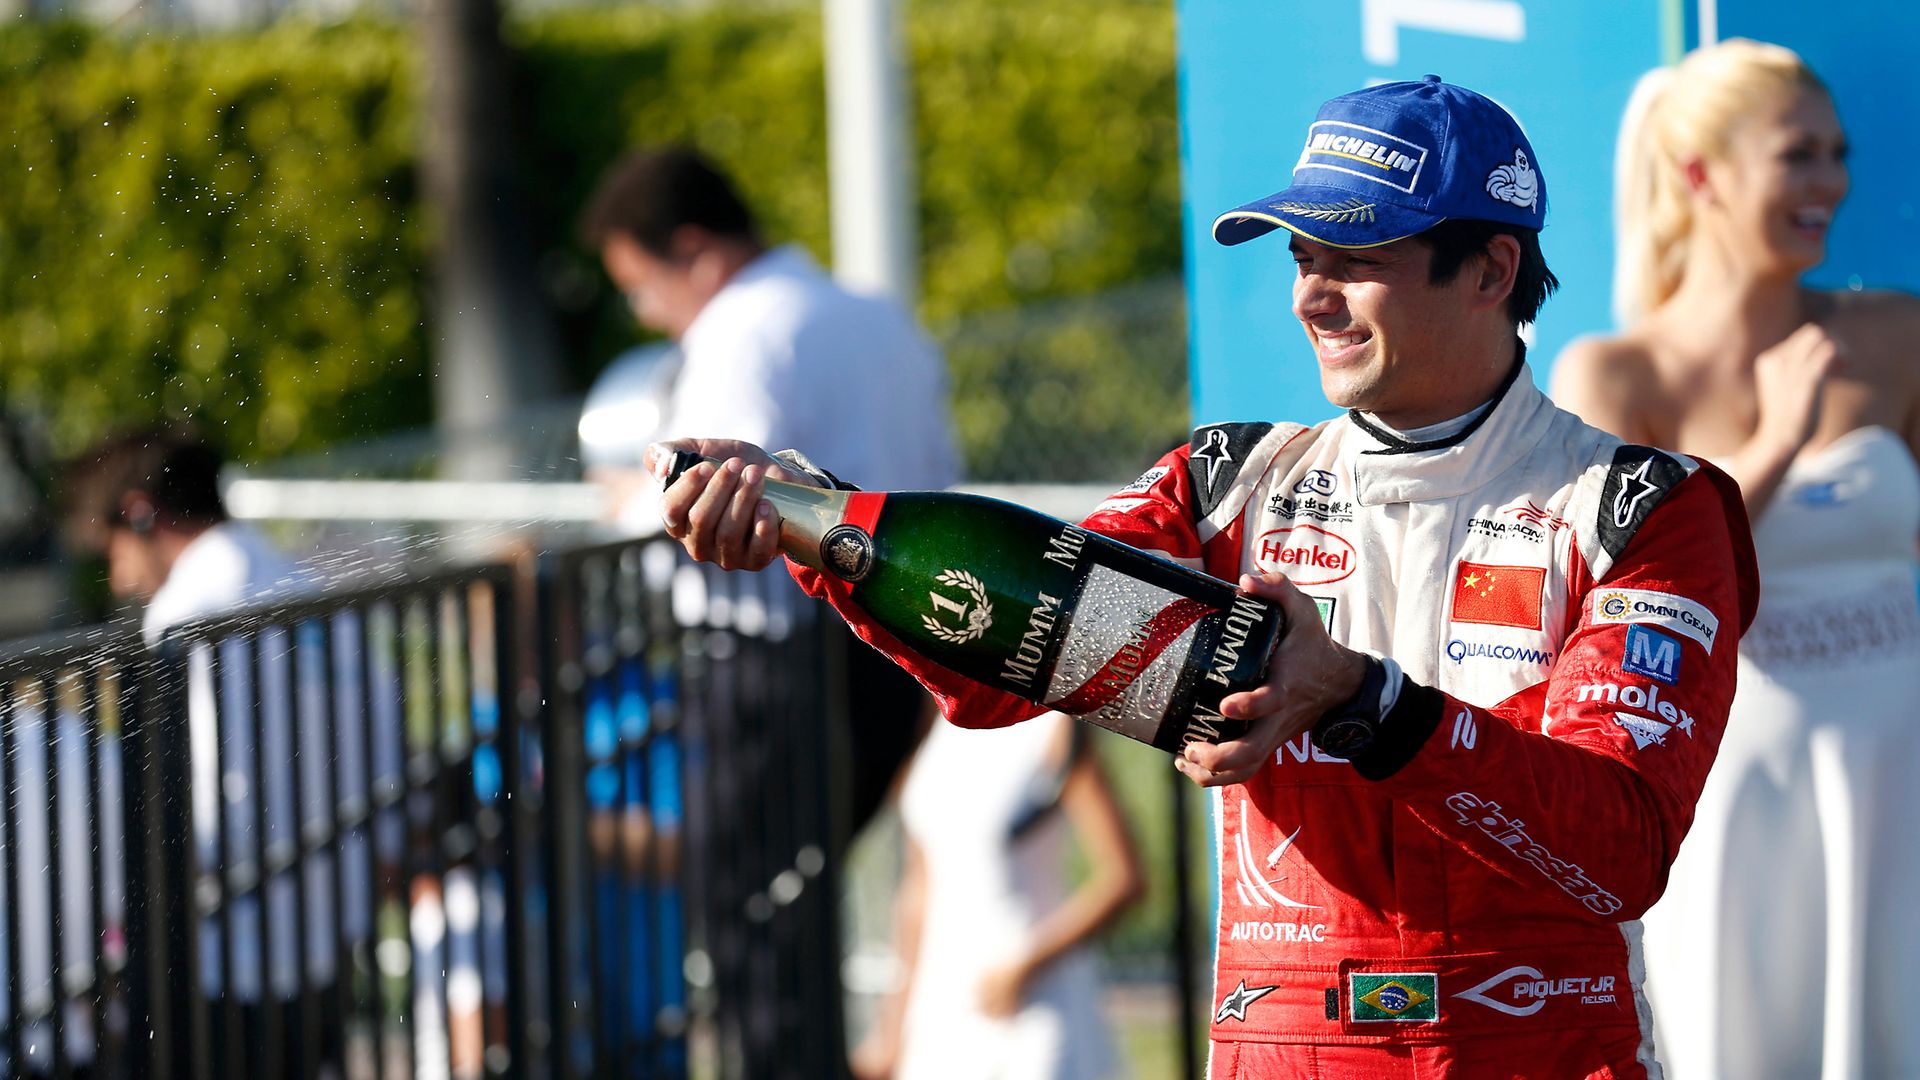 

Following a third place finish in Argentina, team pilot Nelson Piquet Jr. won the most recent race in Long Beach, USA.